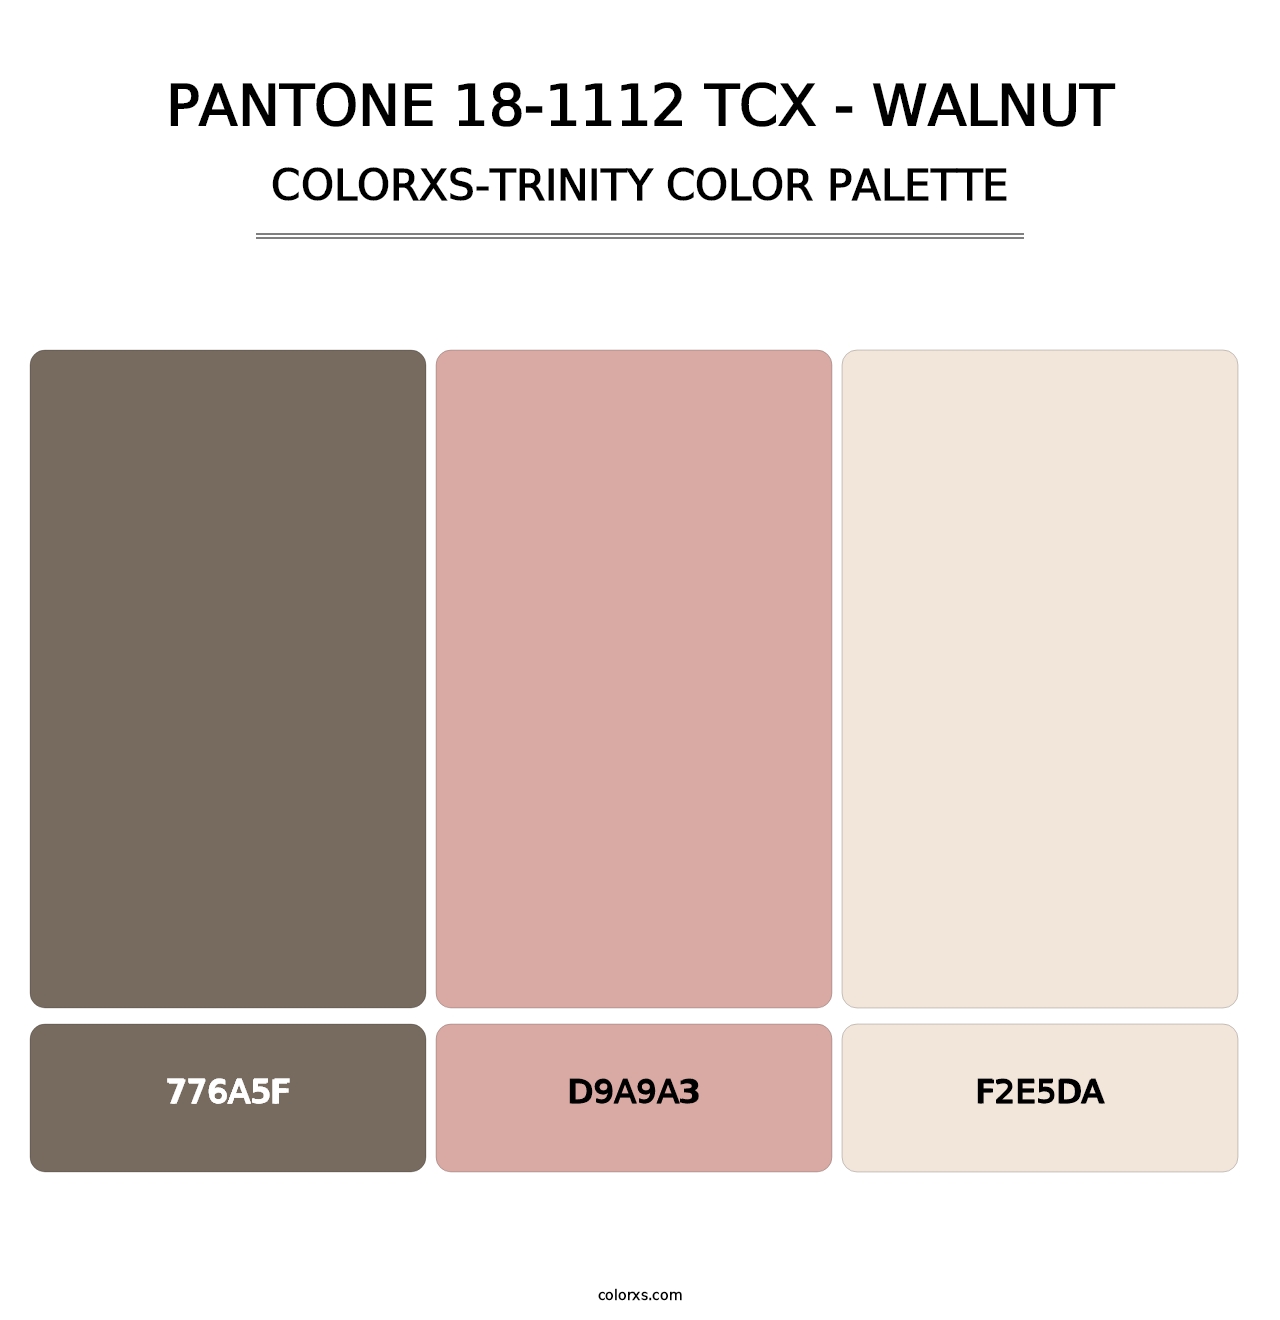 PANTONE 18-1112 TCX - Walnut - Colorxs Trinity Palette